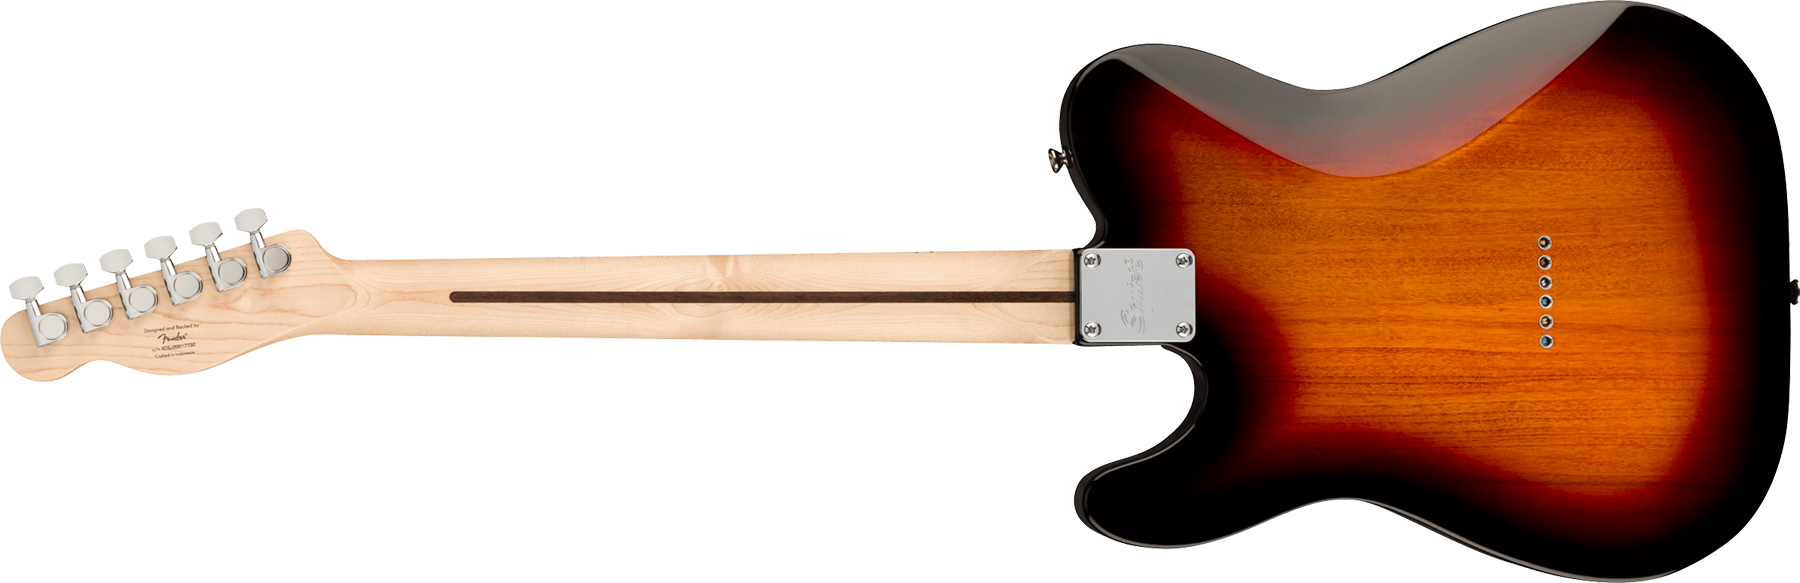 Squier Tele Affinity 2021 2s Mn - 3-color Sunburst - Guitarra eléctrica con forma de tel - Variation 1